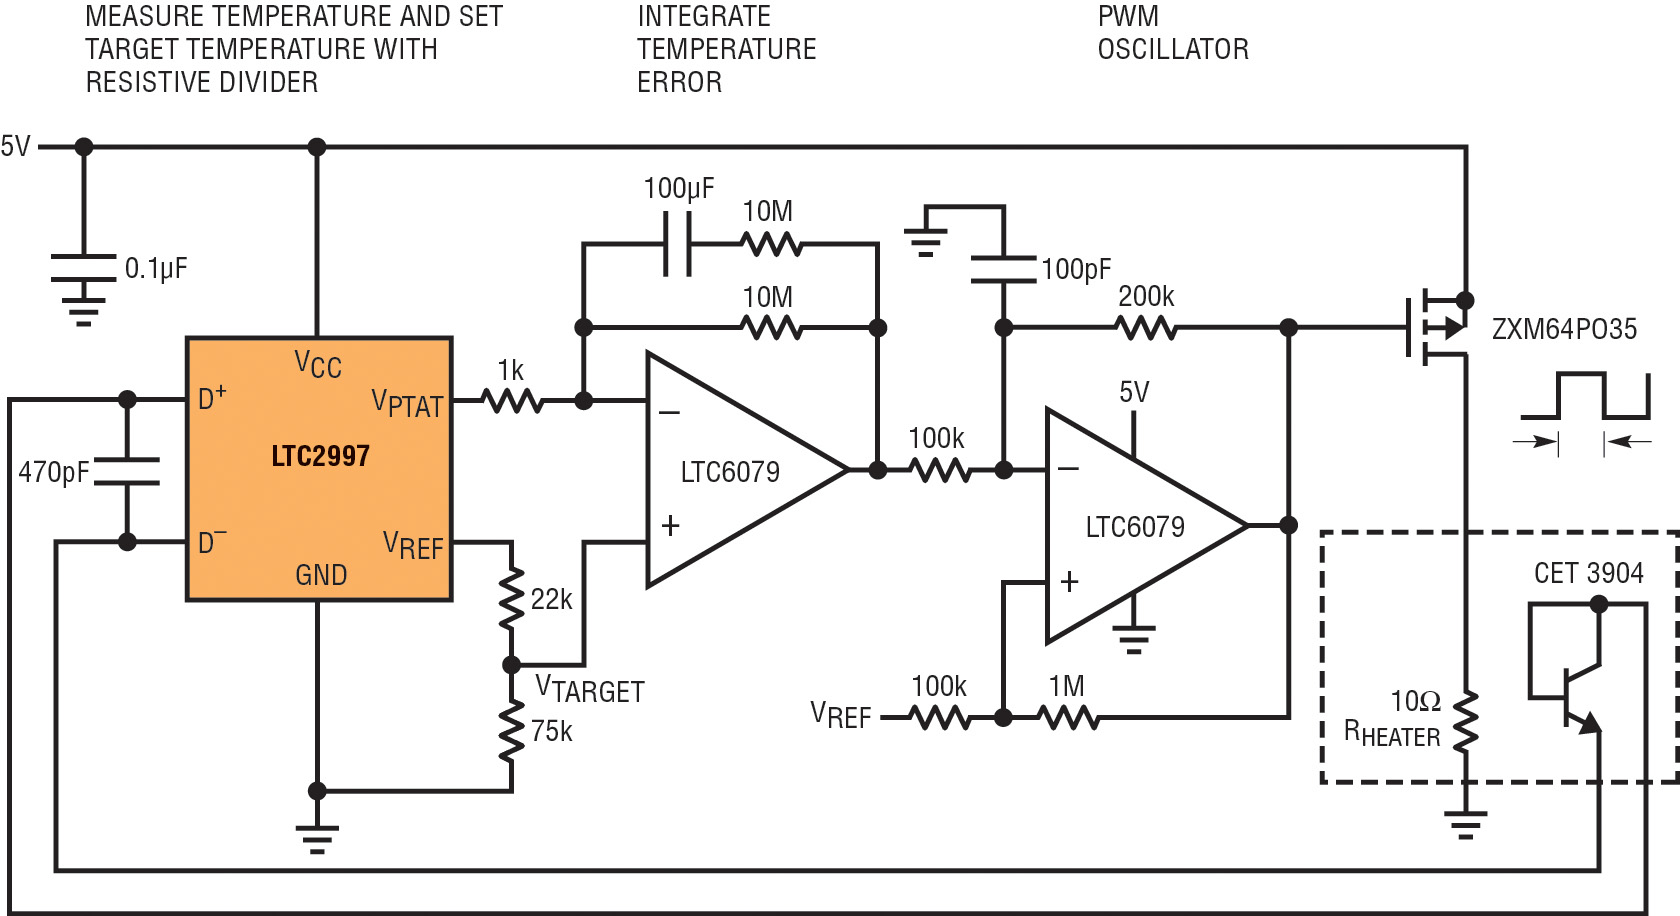 Figure 3 - 75°C analogue PWM heater controller